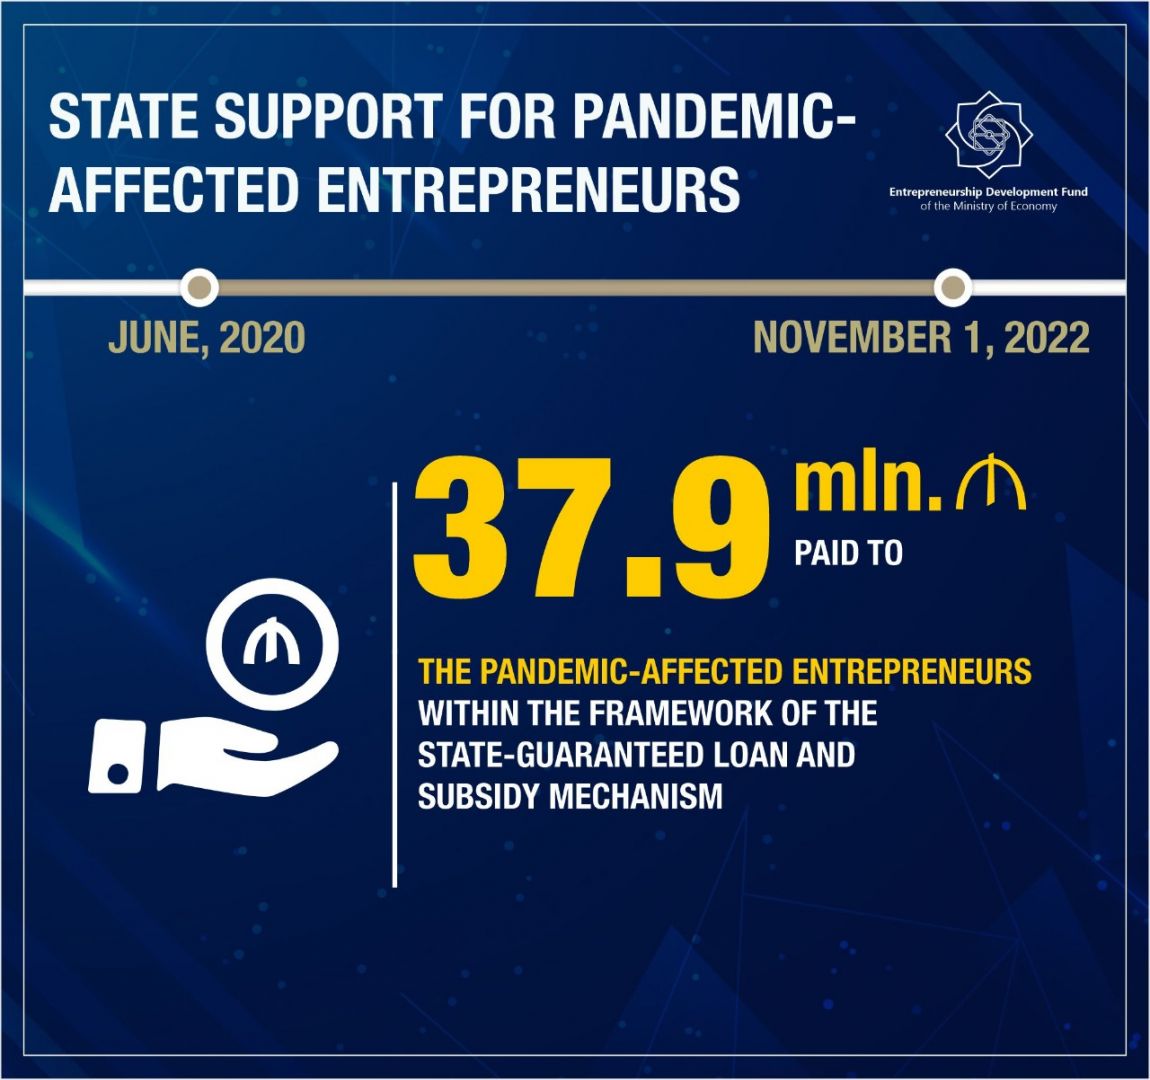 Azerbaijan allocates $22.2m to pandemic-affected entrepreneurs [PHOTO] - Gallery Image